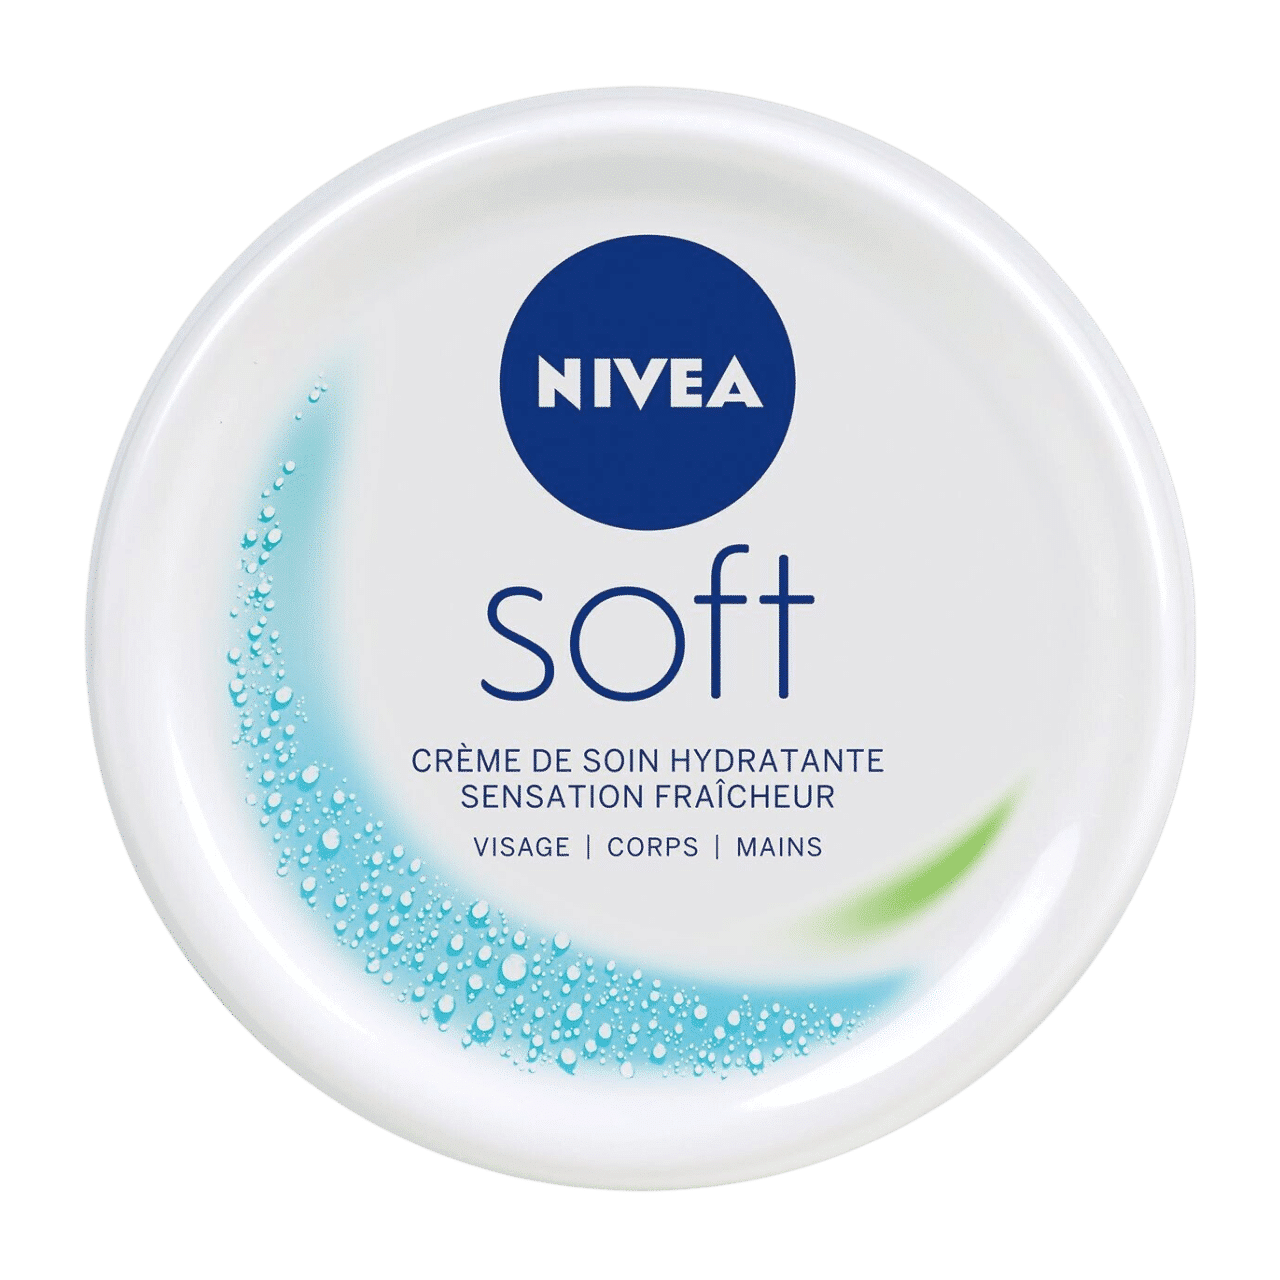 NIVEA Soft